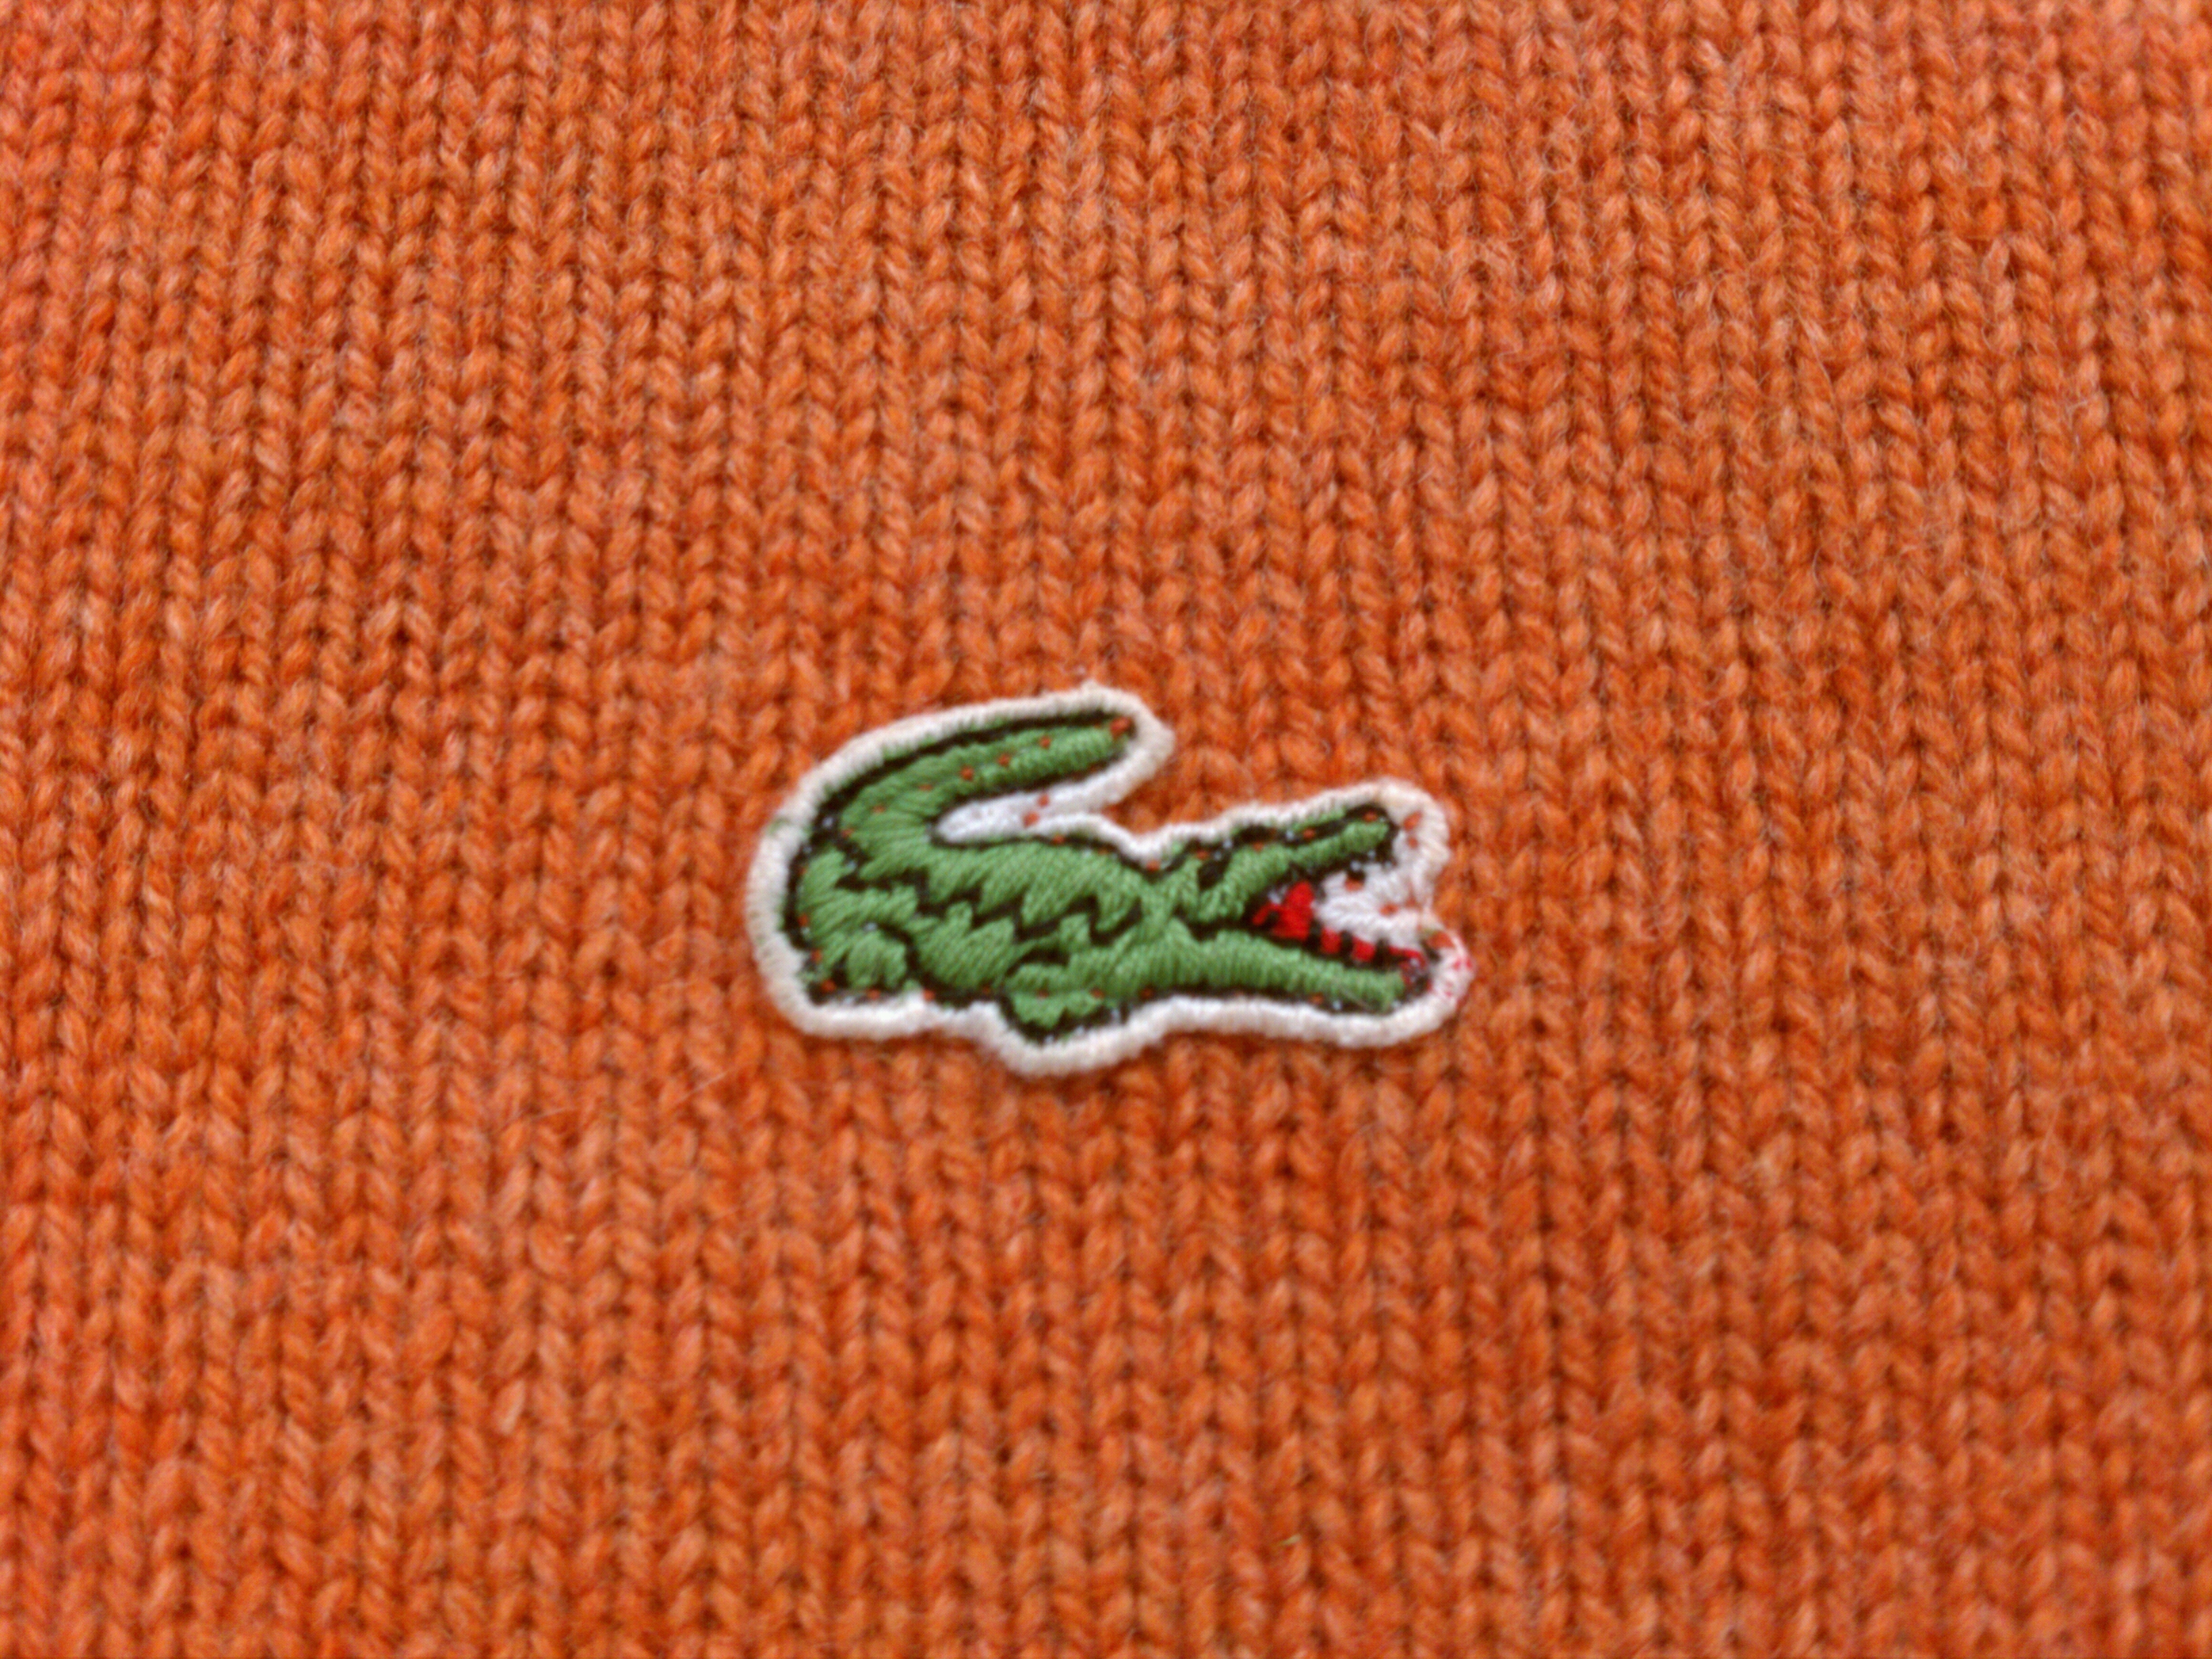 clothing brand with alligator logo